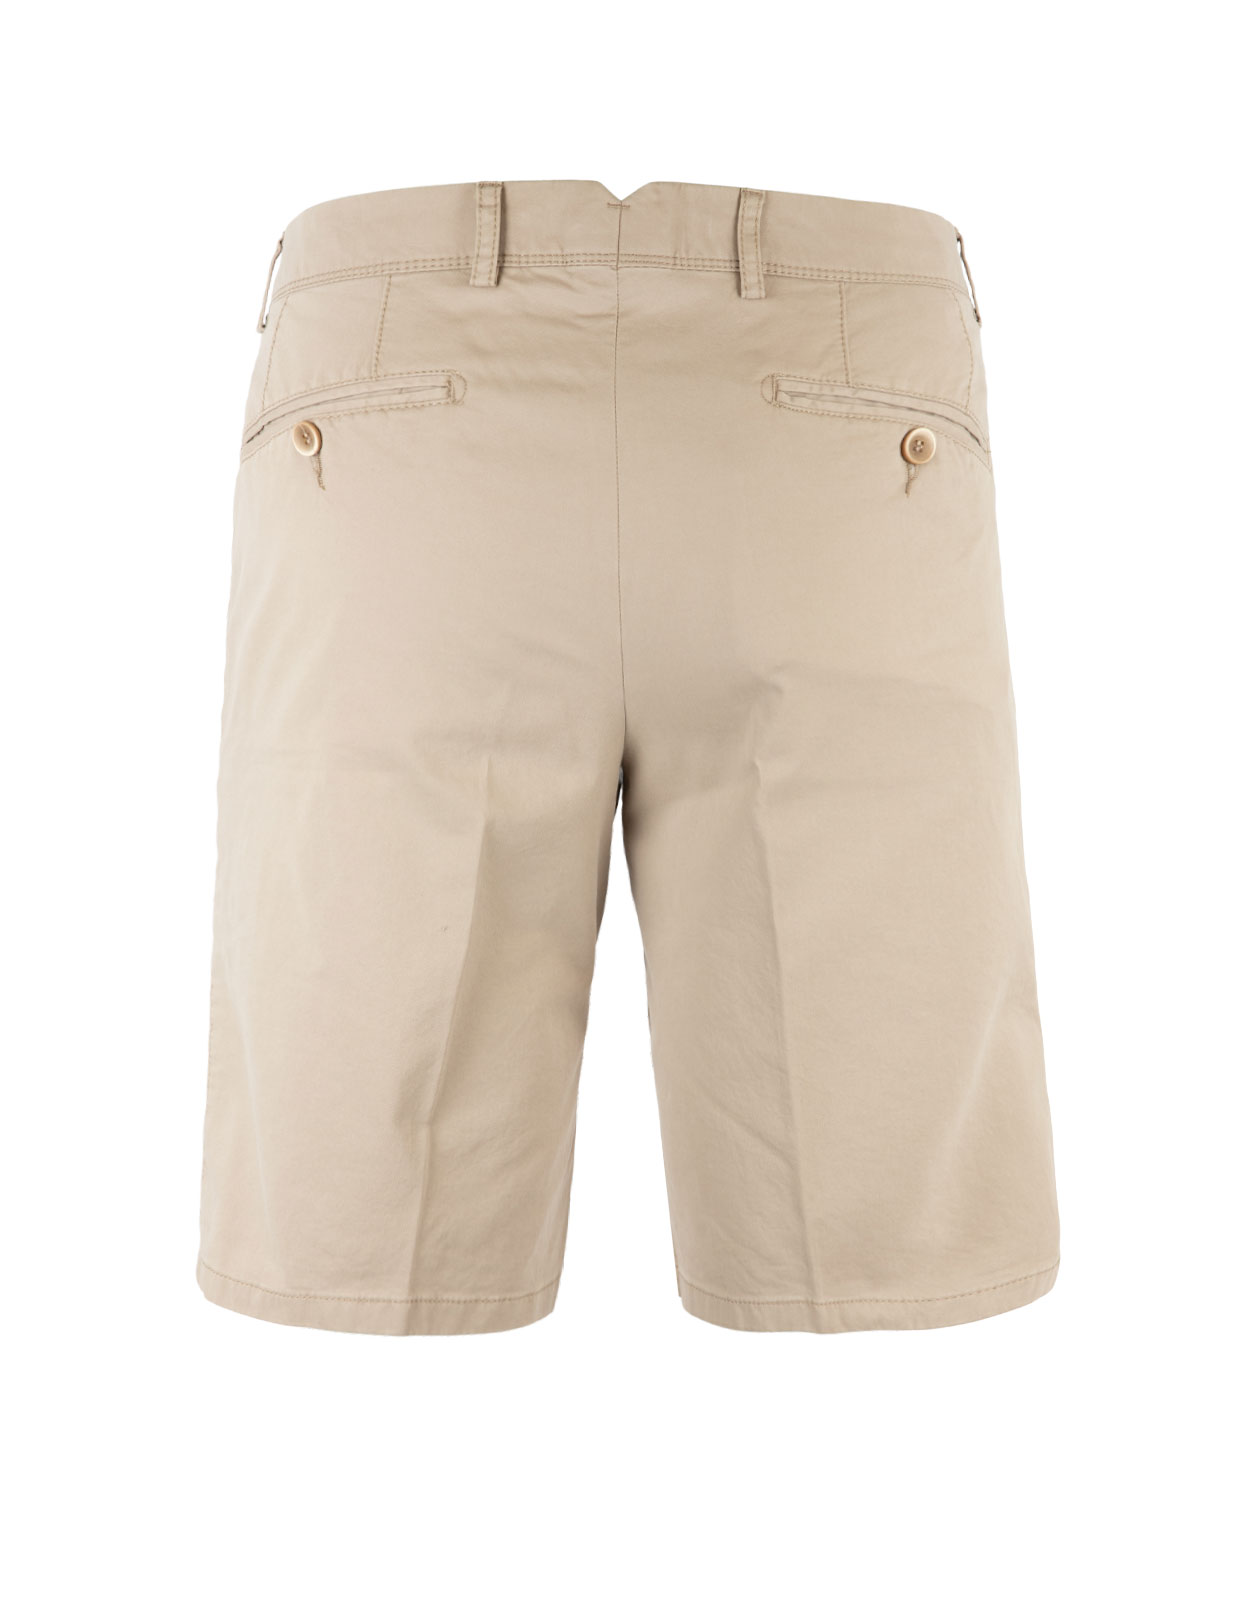 Shorts Regular Fit Cotton Stretch Sand Beige